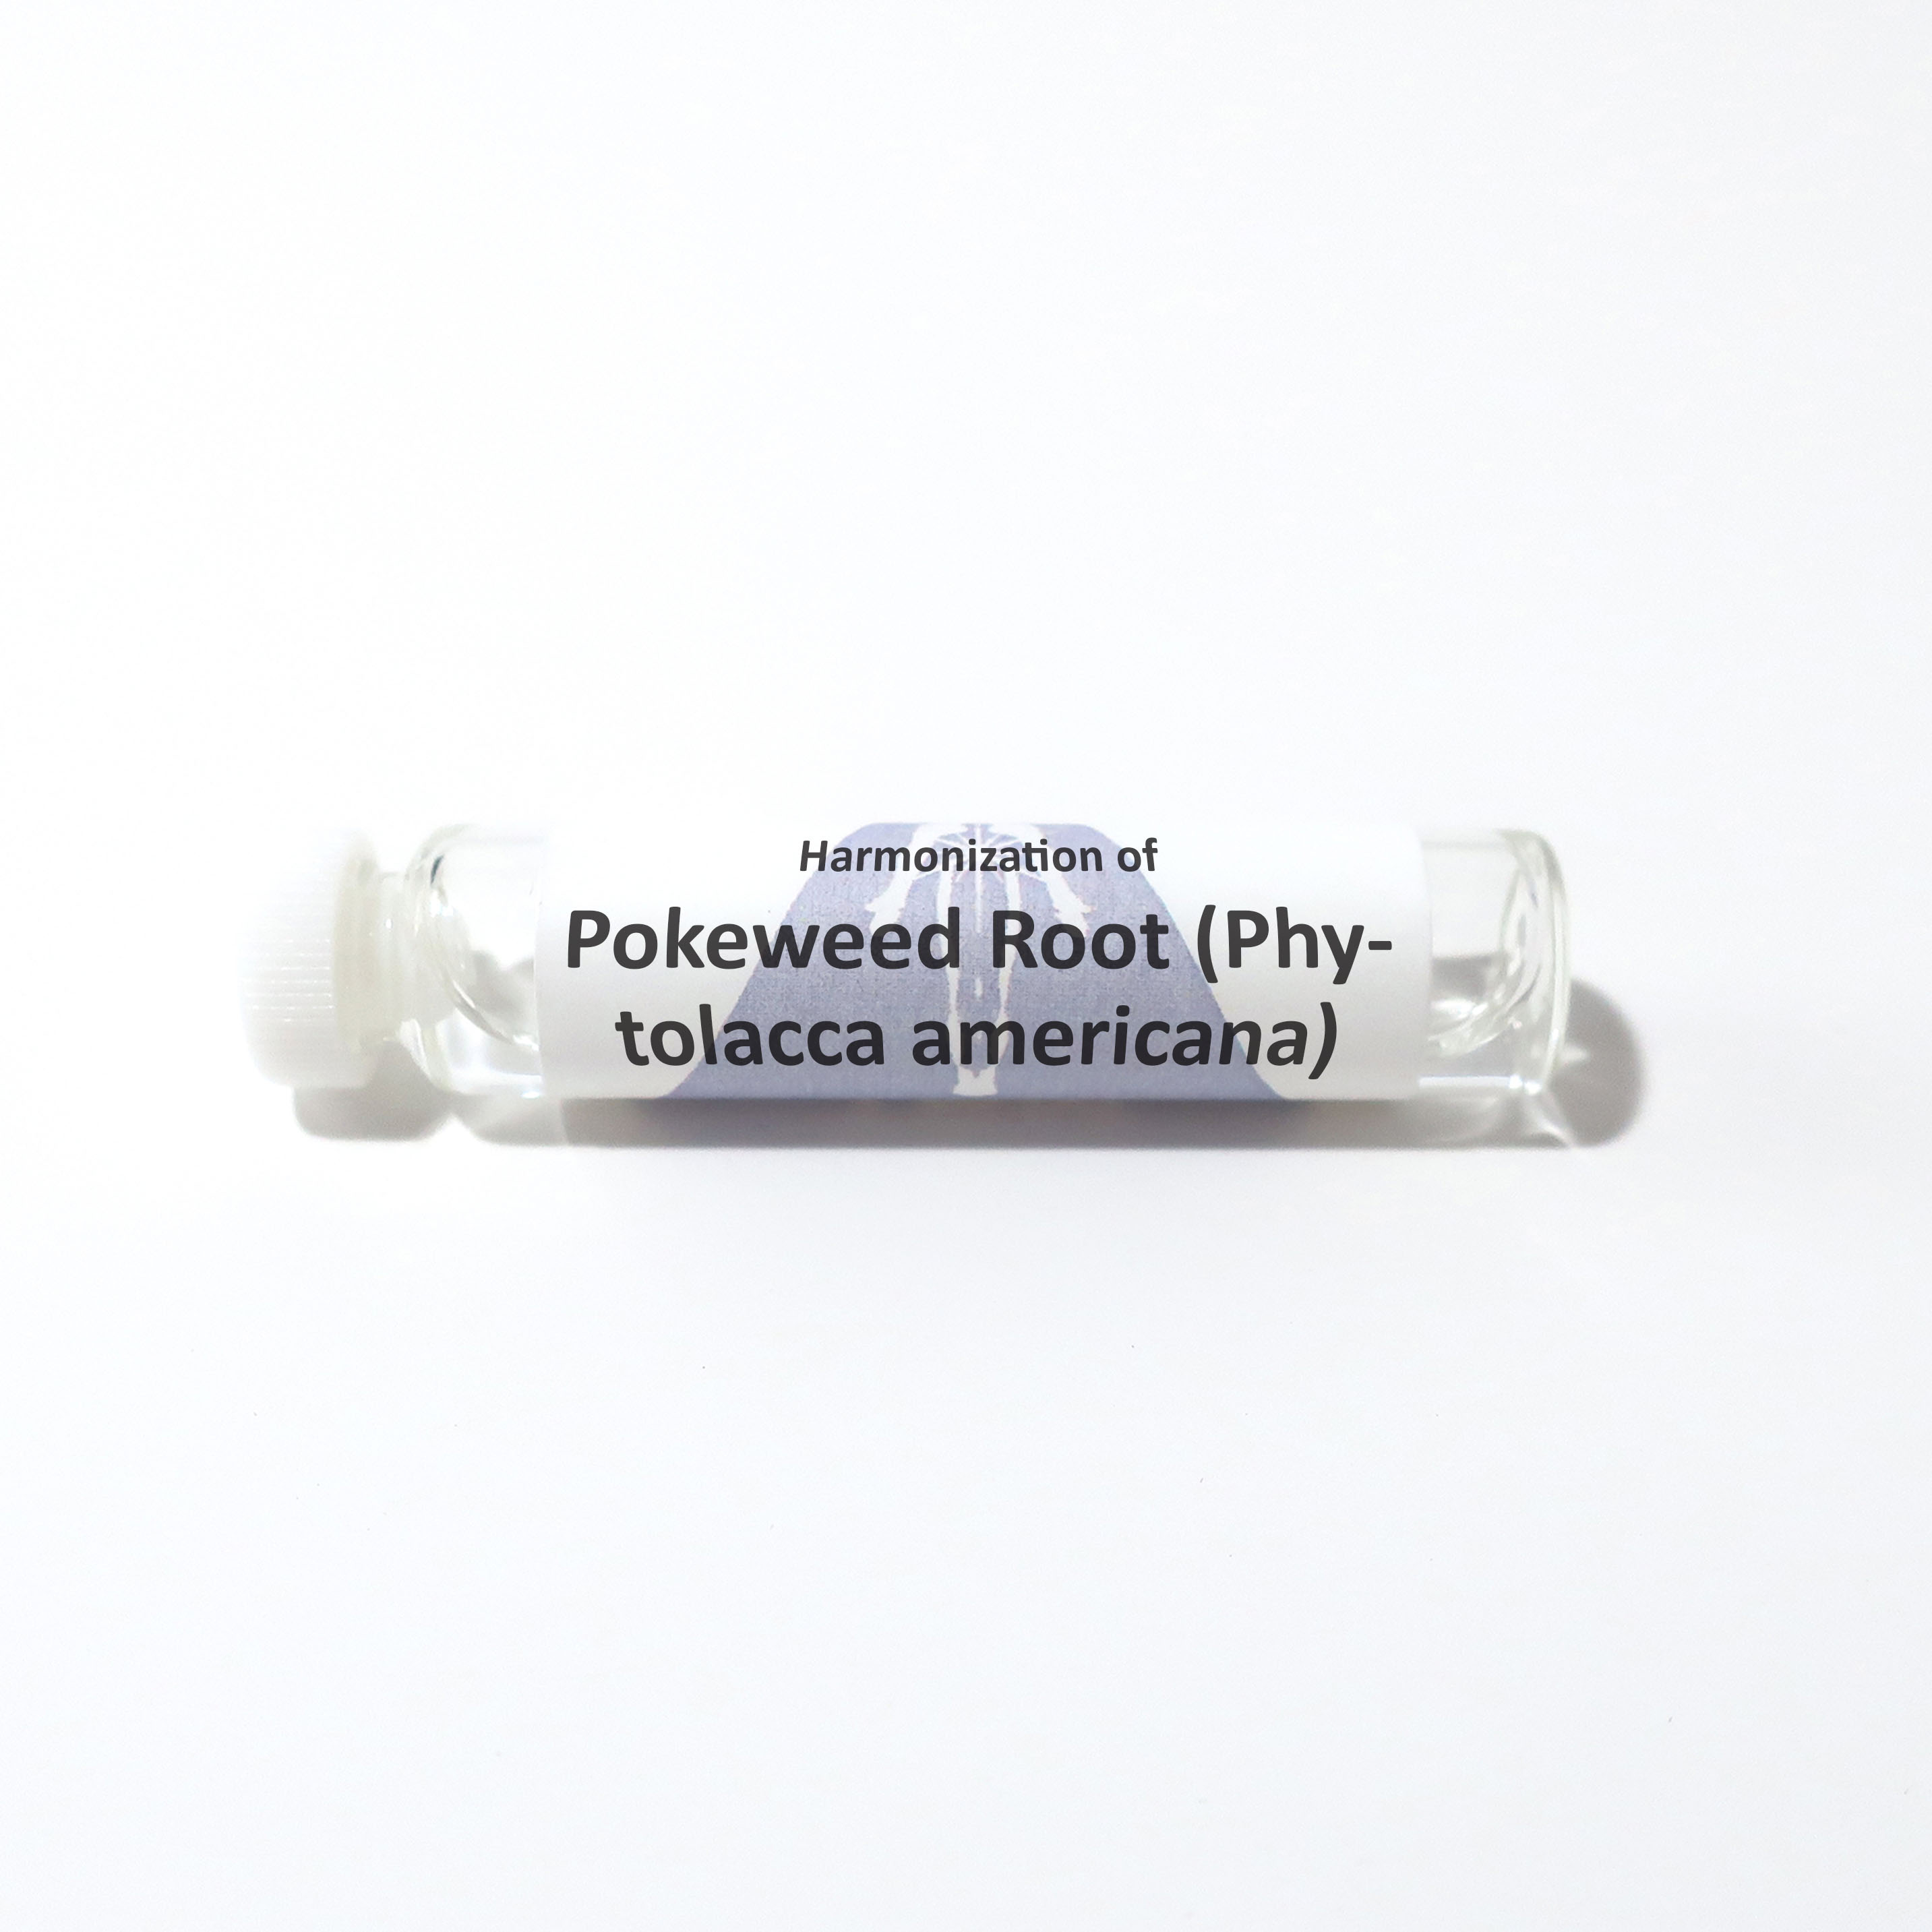 Pokeweed Root (Phytolacca americana)